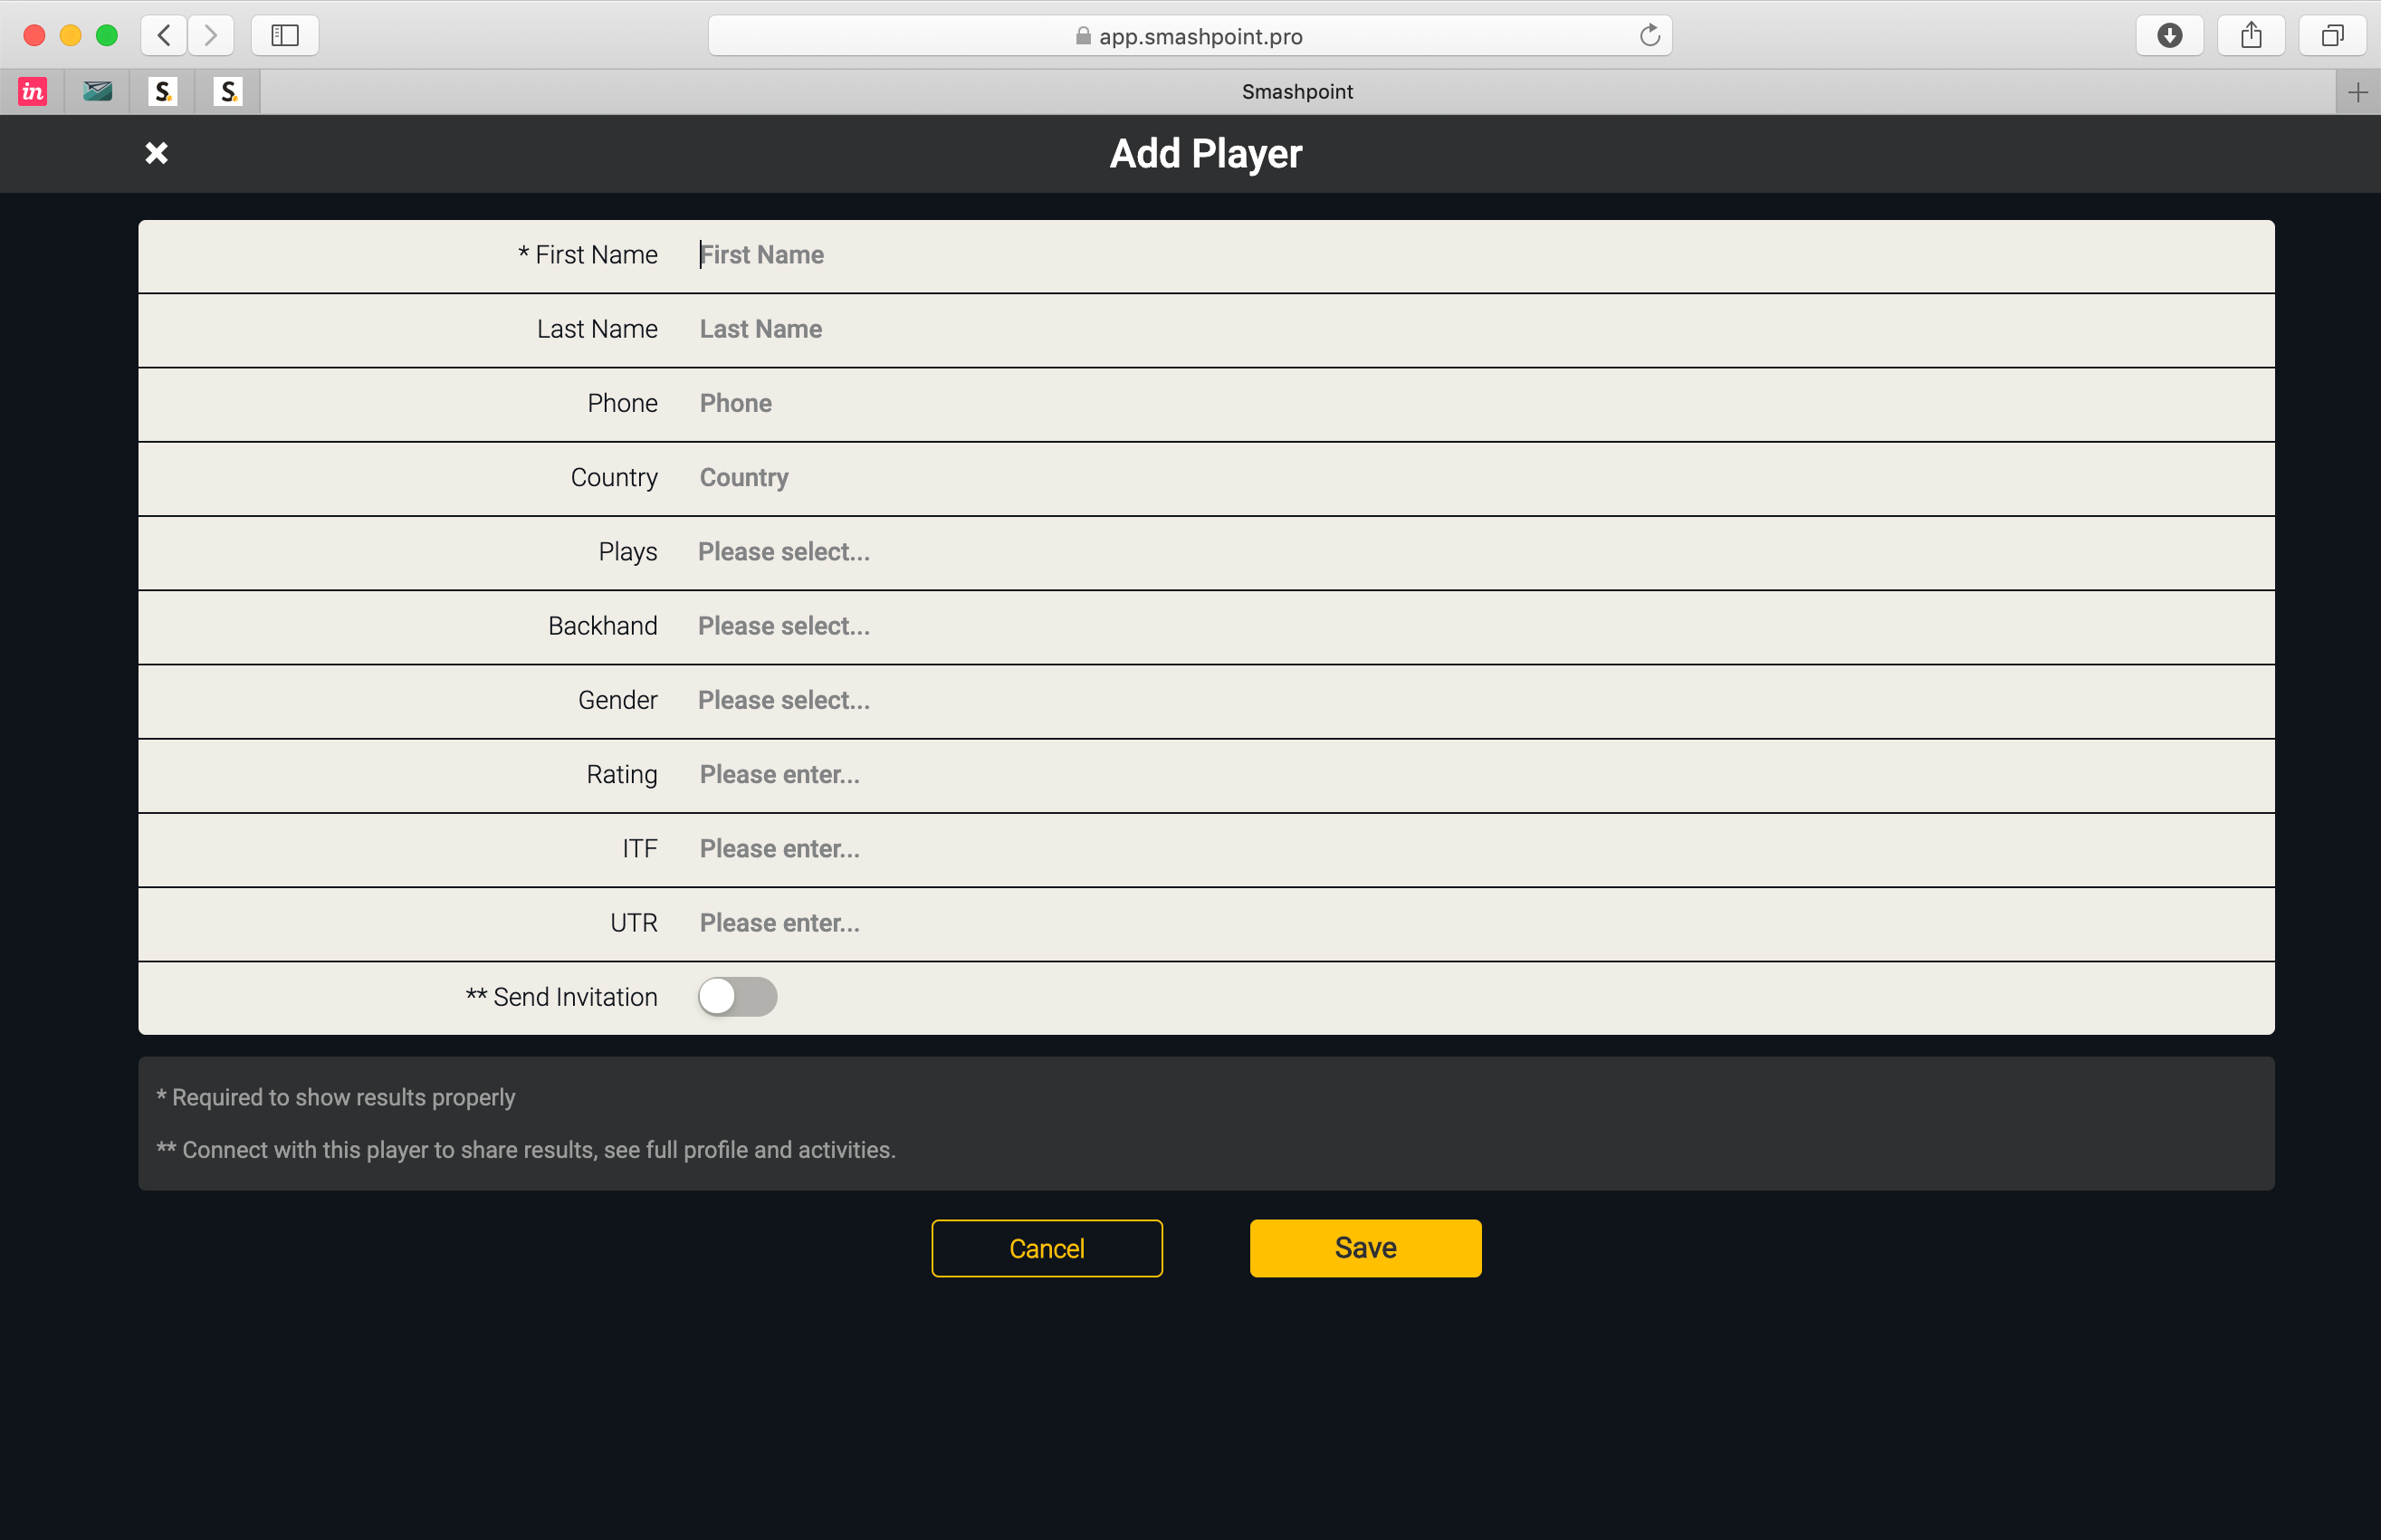 Smashpoint Web App – Add Player